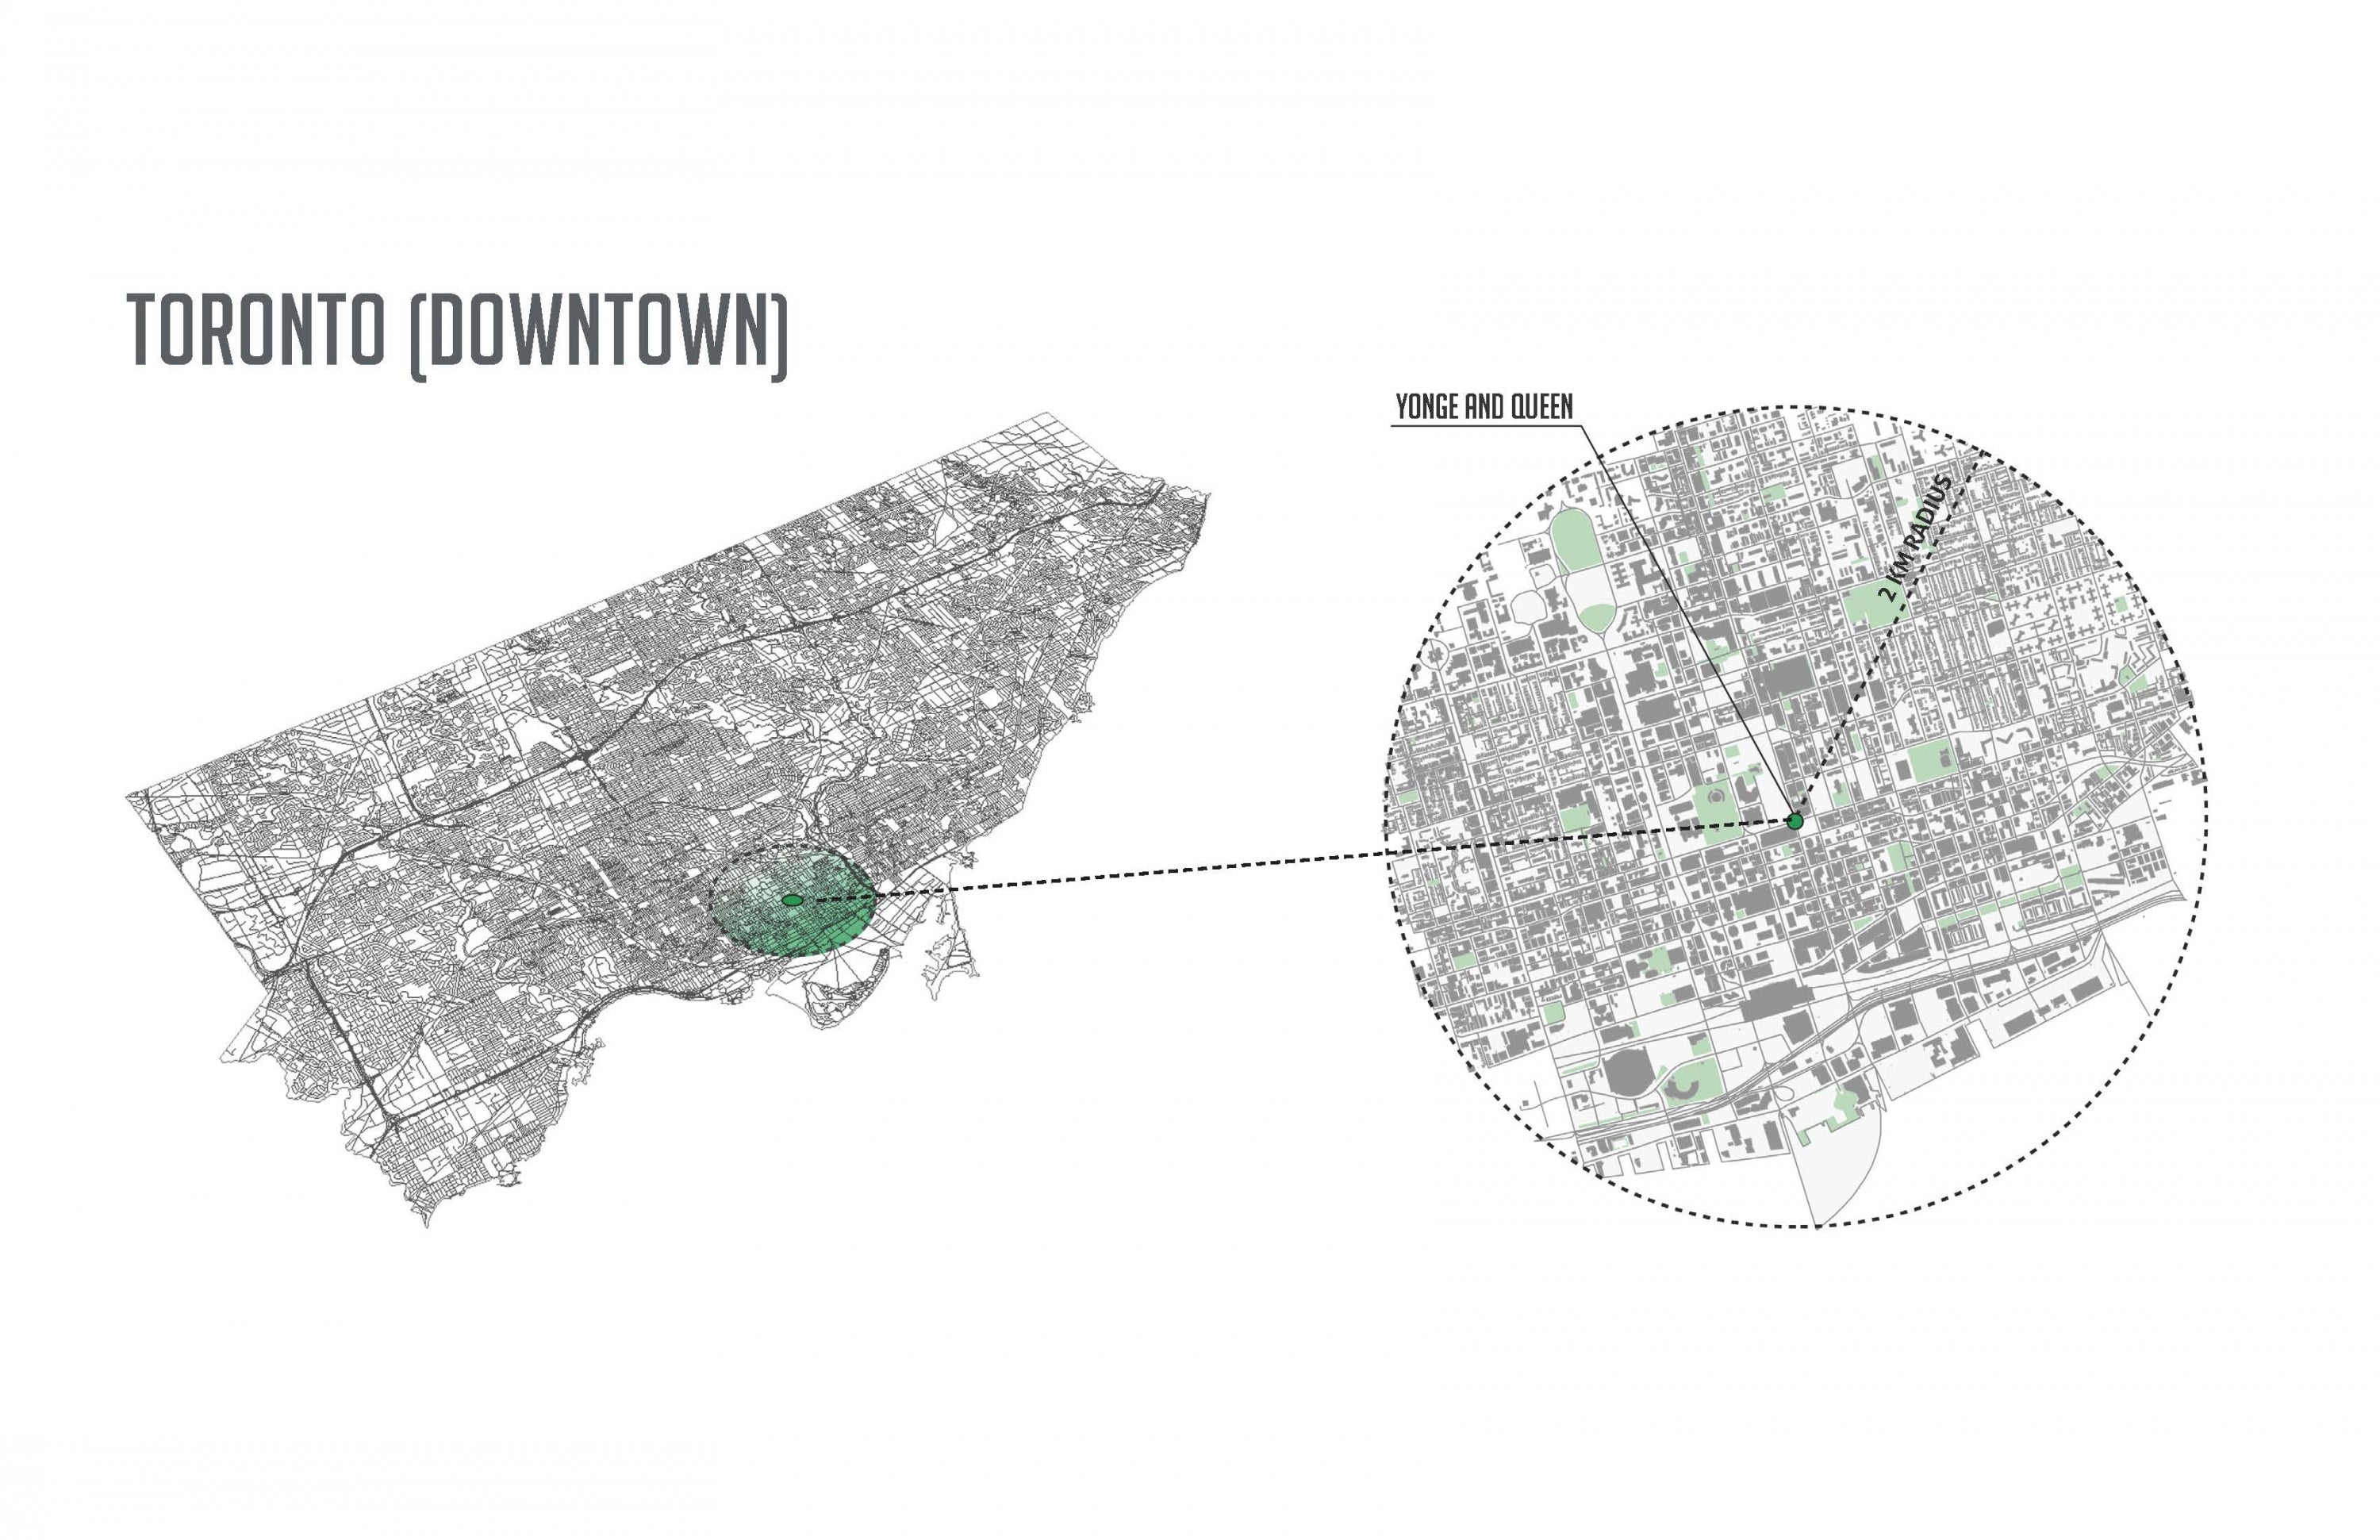 Site Analysis Area of Downtown Toronto